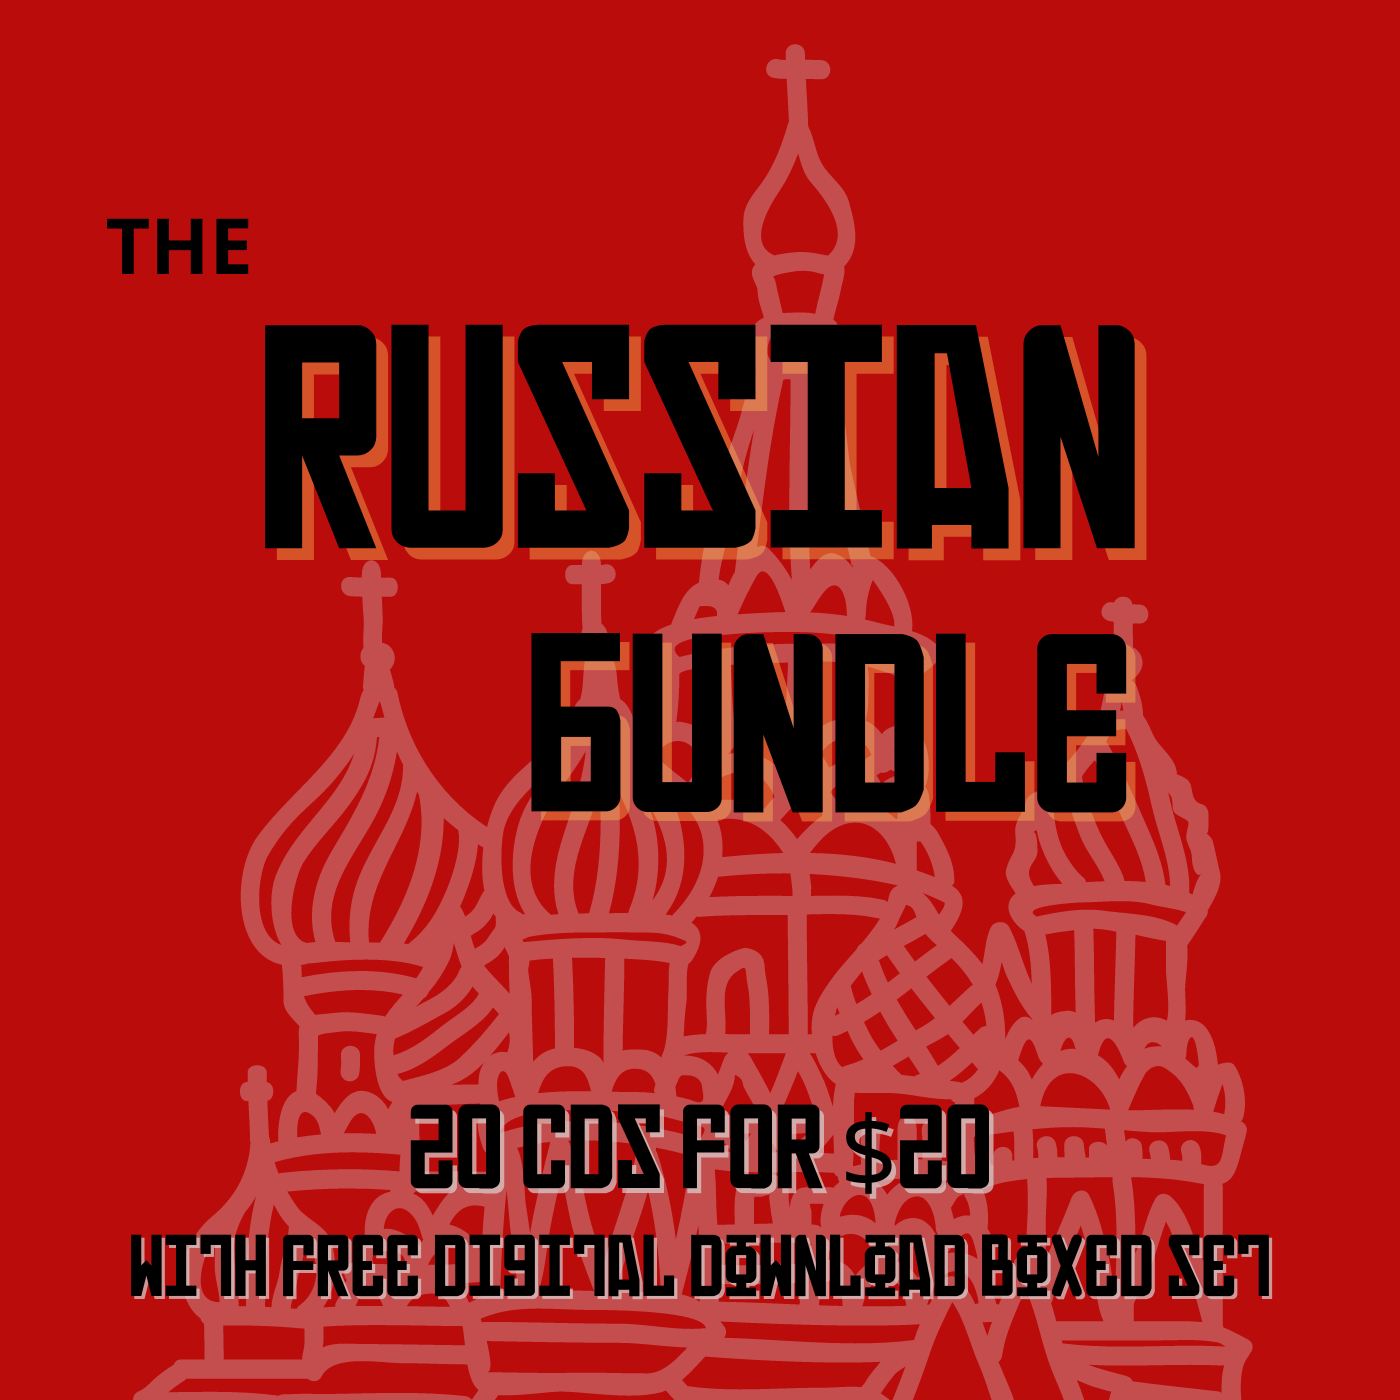 THE RUSSIAN BUNDLE (20 CDs + DIGITAL BOXED SET)